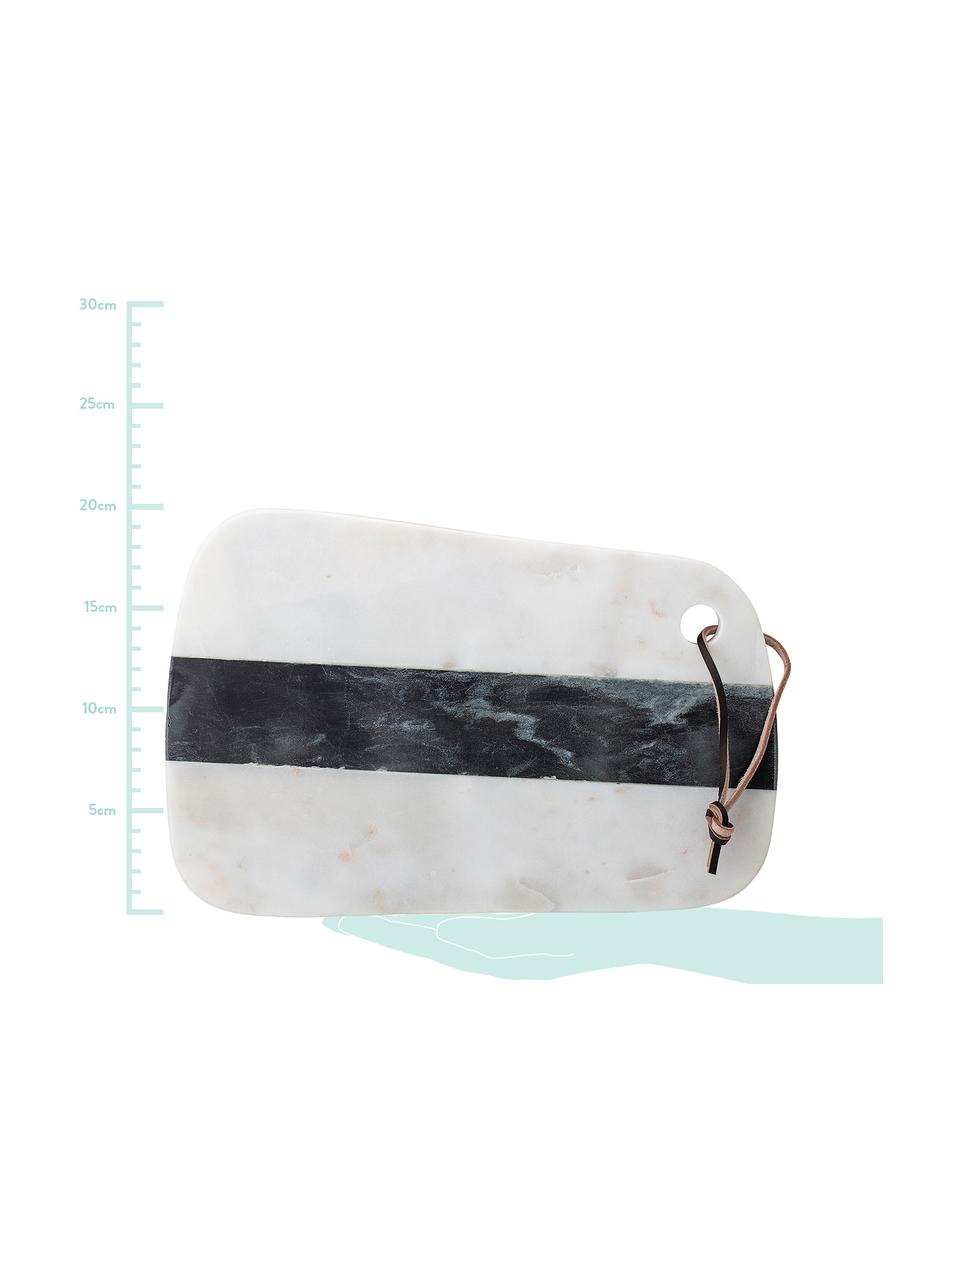 Marmor-Schneidebrett Black and White, B 20 x L 31 cm, Schwarz, Weiß, 20 x 31 cm